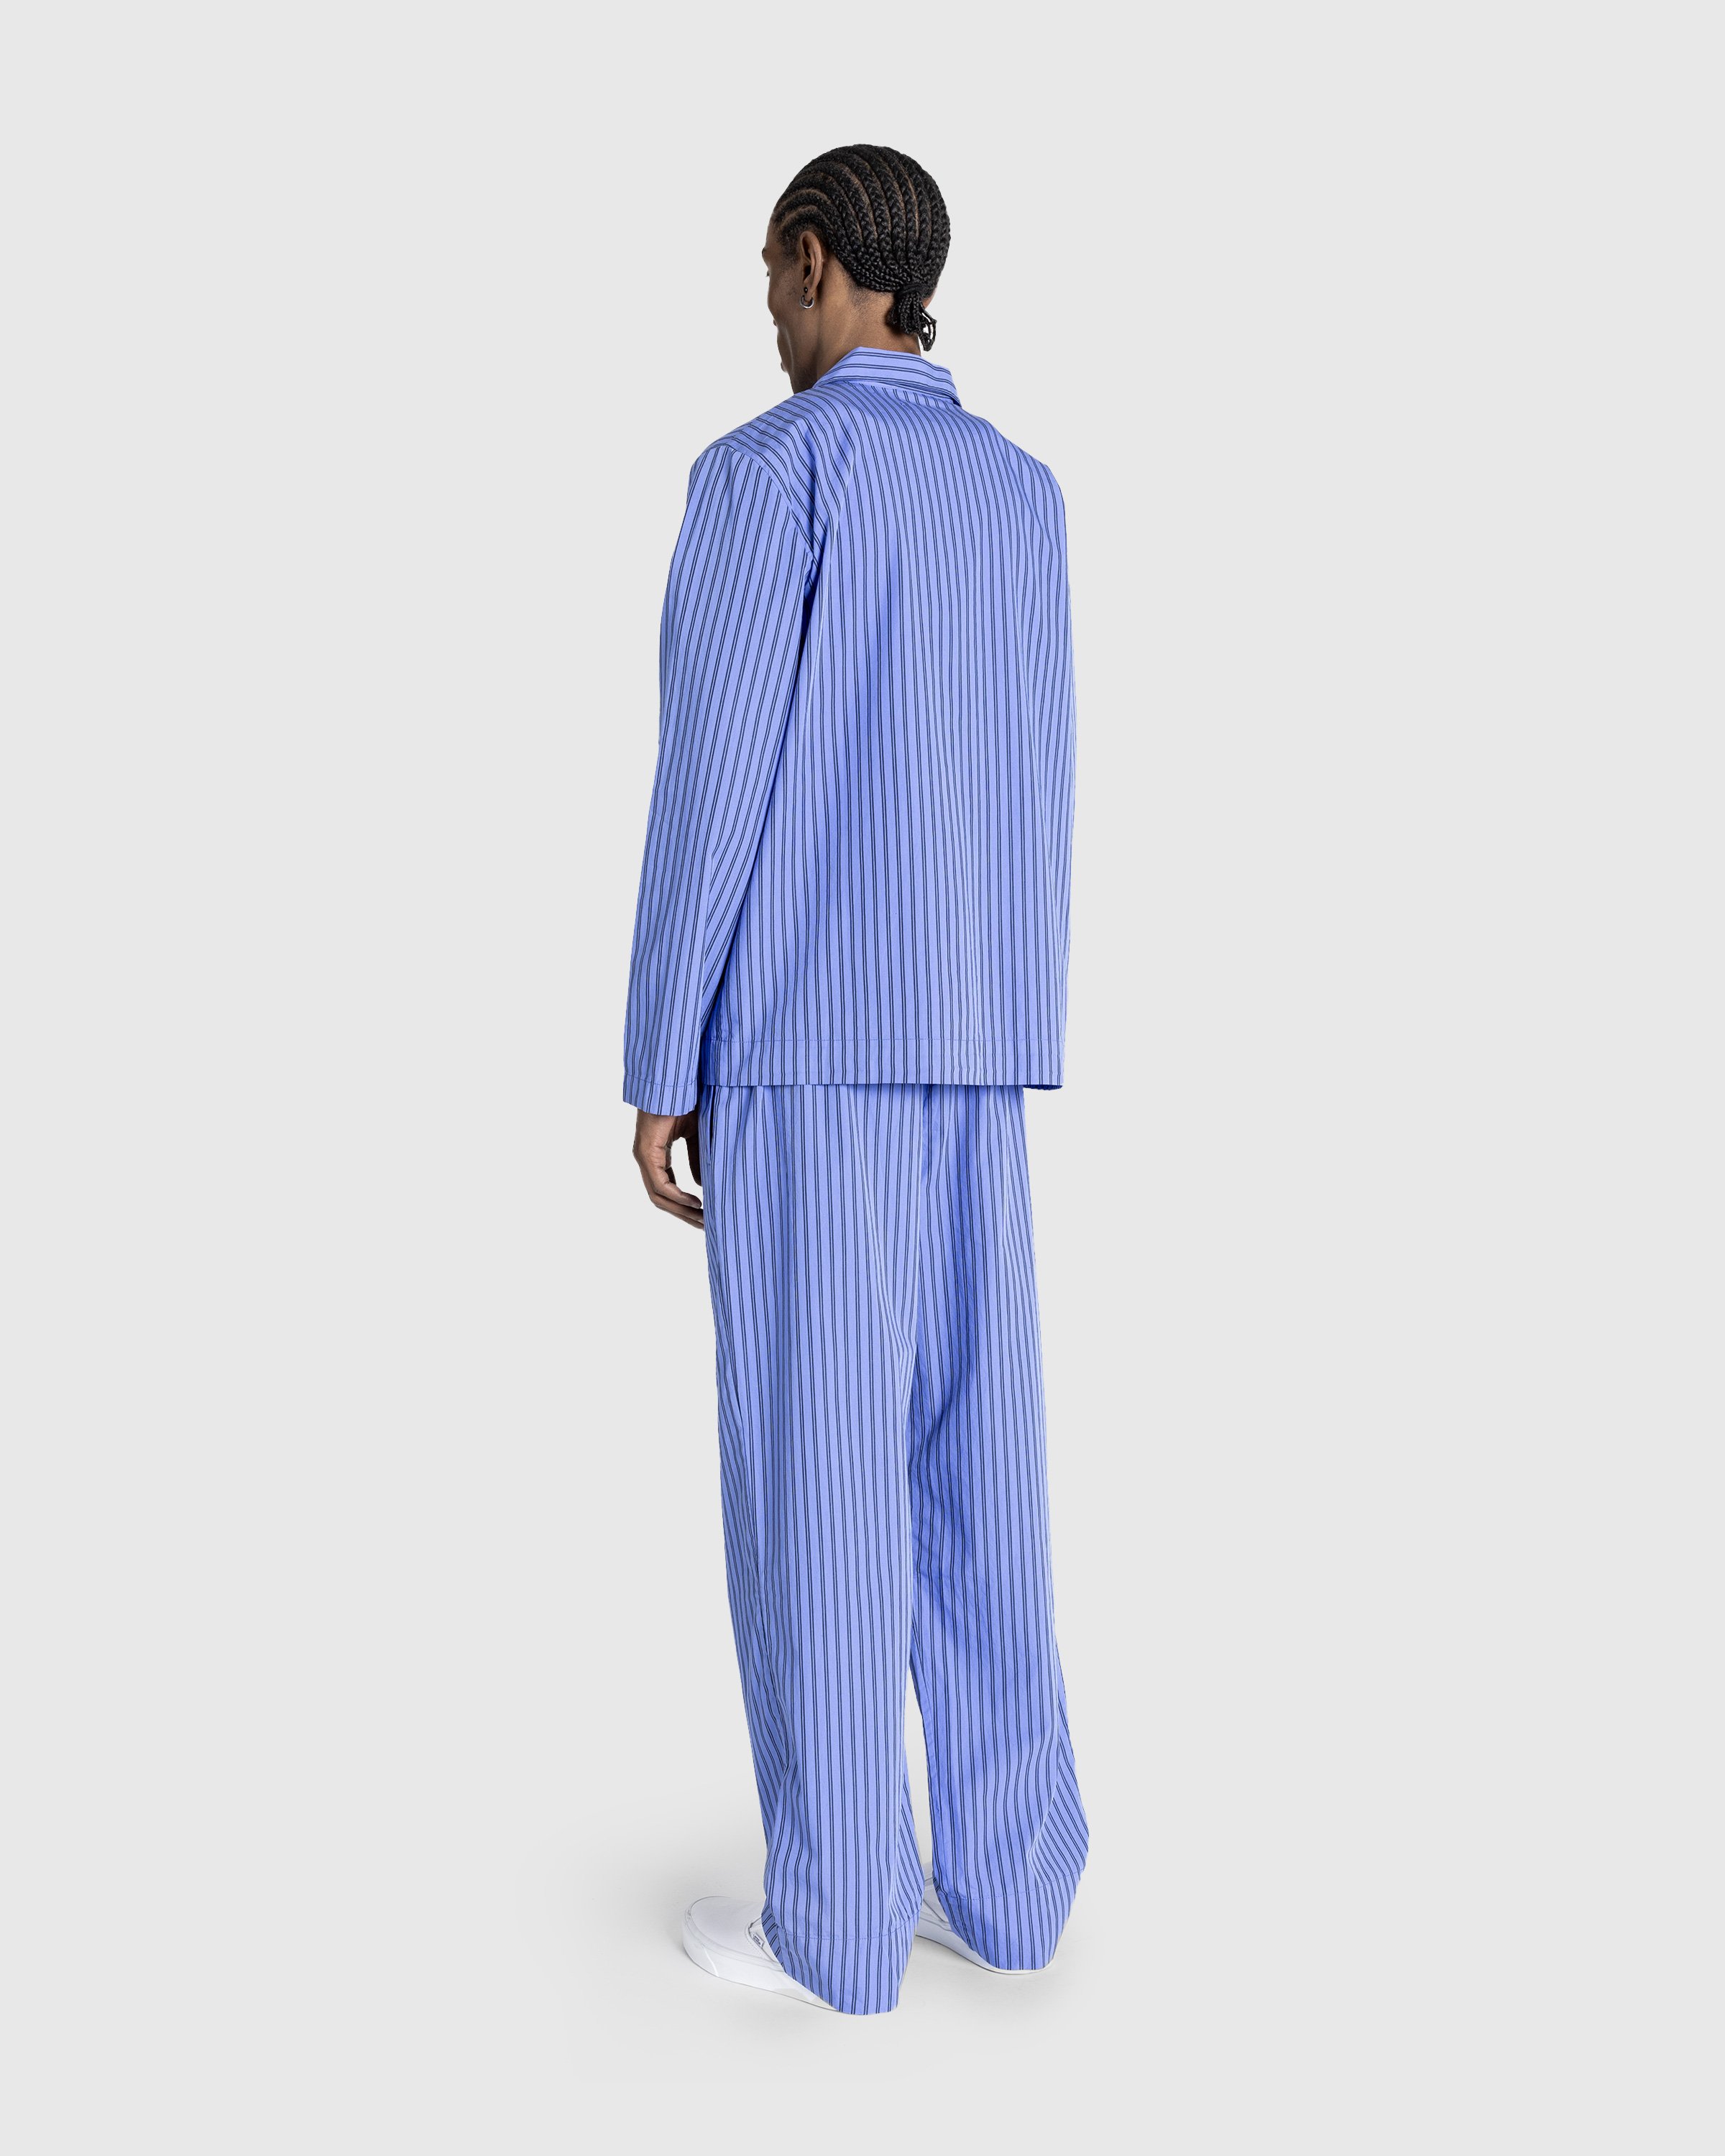 Tekla - Cotton Poplin - Pyjamas Pants Boro Stripes - Clothing - Blue - Image 4